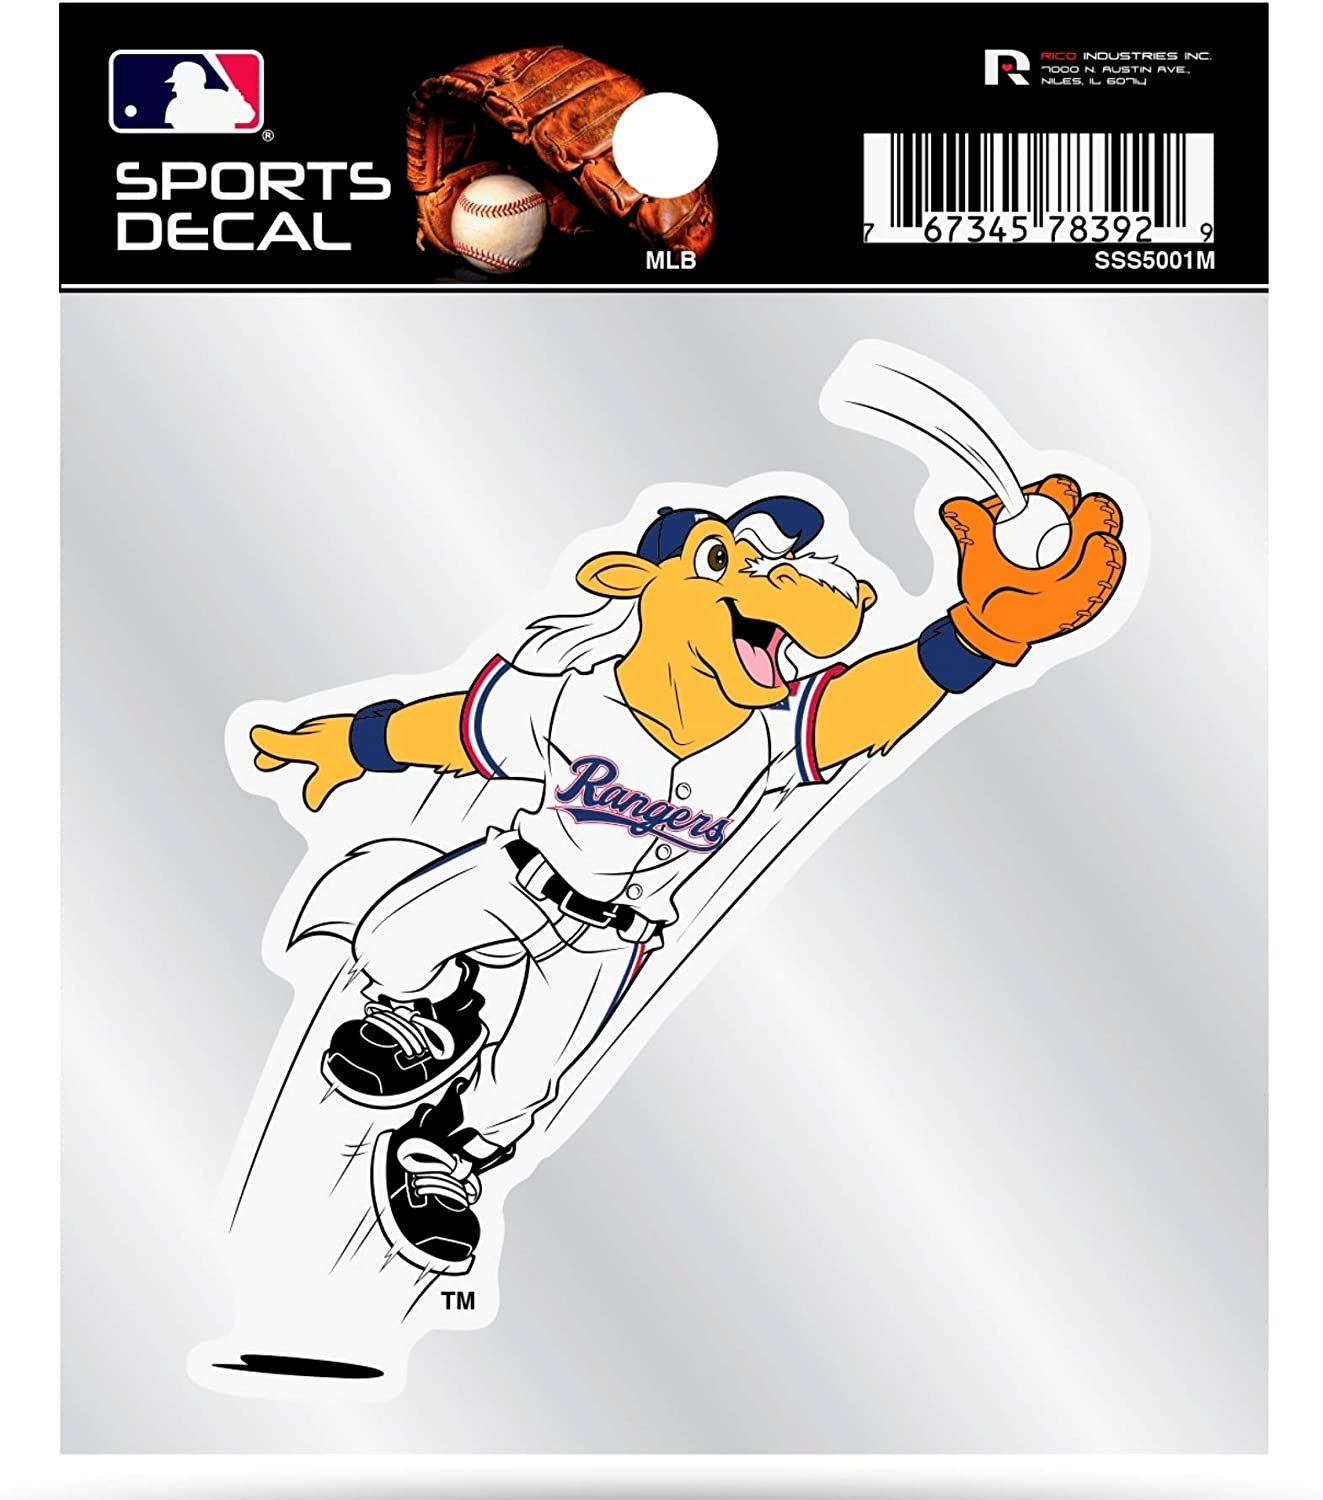 Texas Rangers Mascot Logo Premium 4x4 Decal with Clear Backing Flat Vinyl Auto Home Sticker Baseball